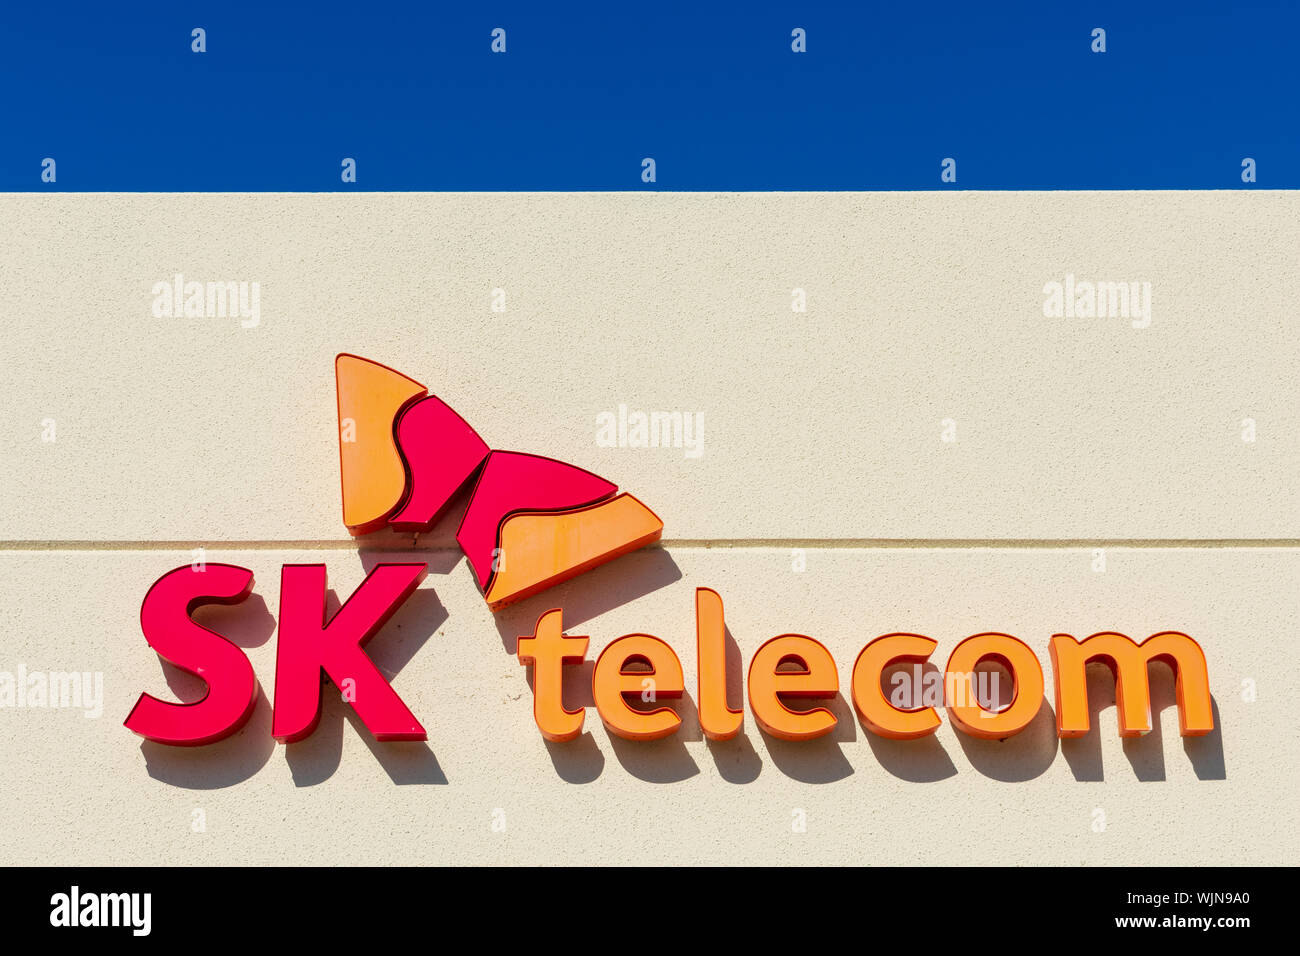 SK Telecom sign at the Korean telecom company office in Silicon Valley, high-tech hub of San Francisco Bay Area Stock Photo